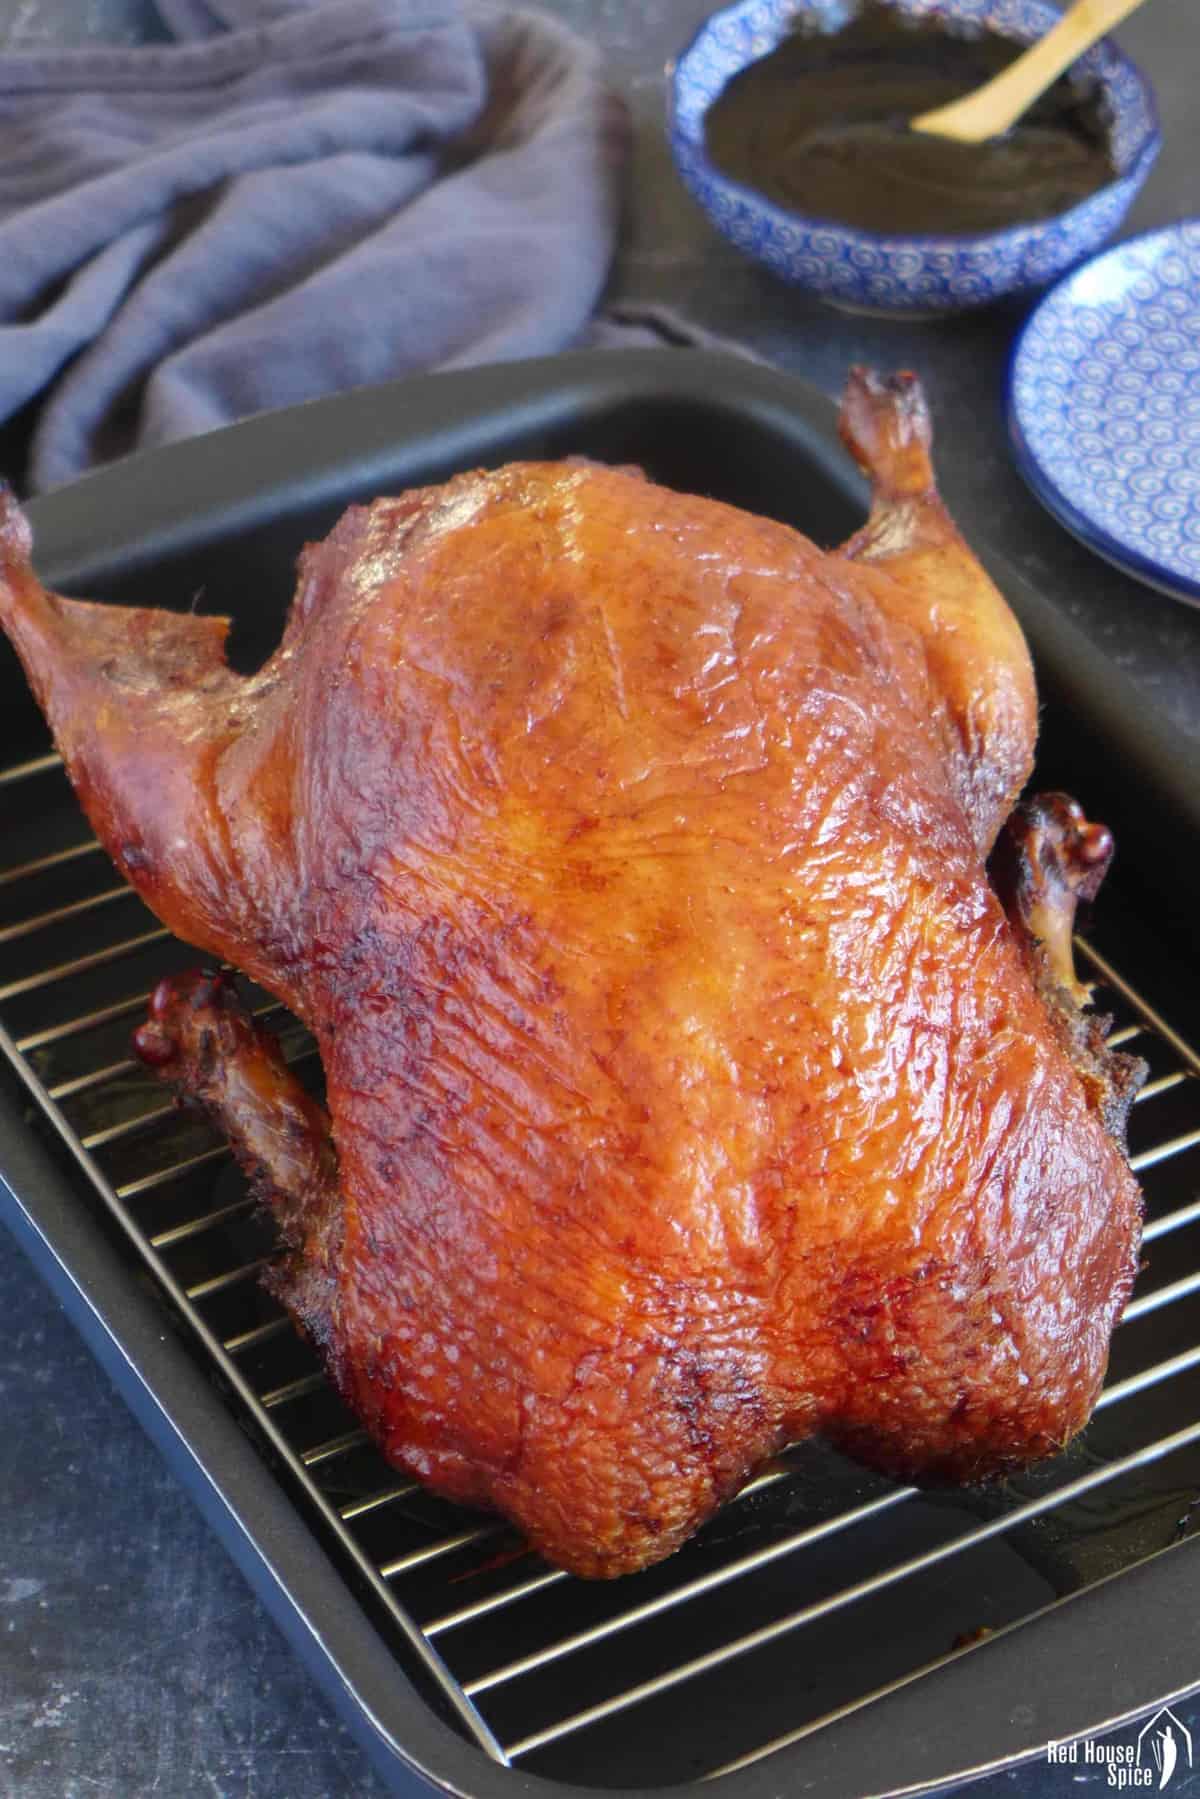 A golden looking roast Peking duck